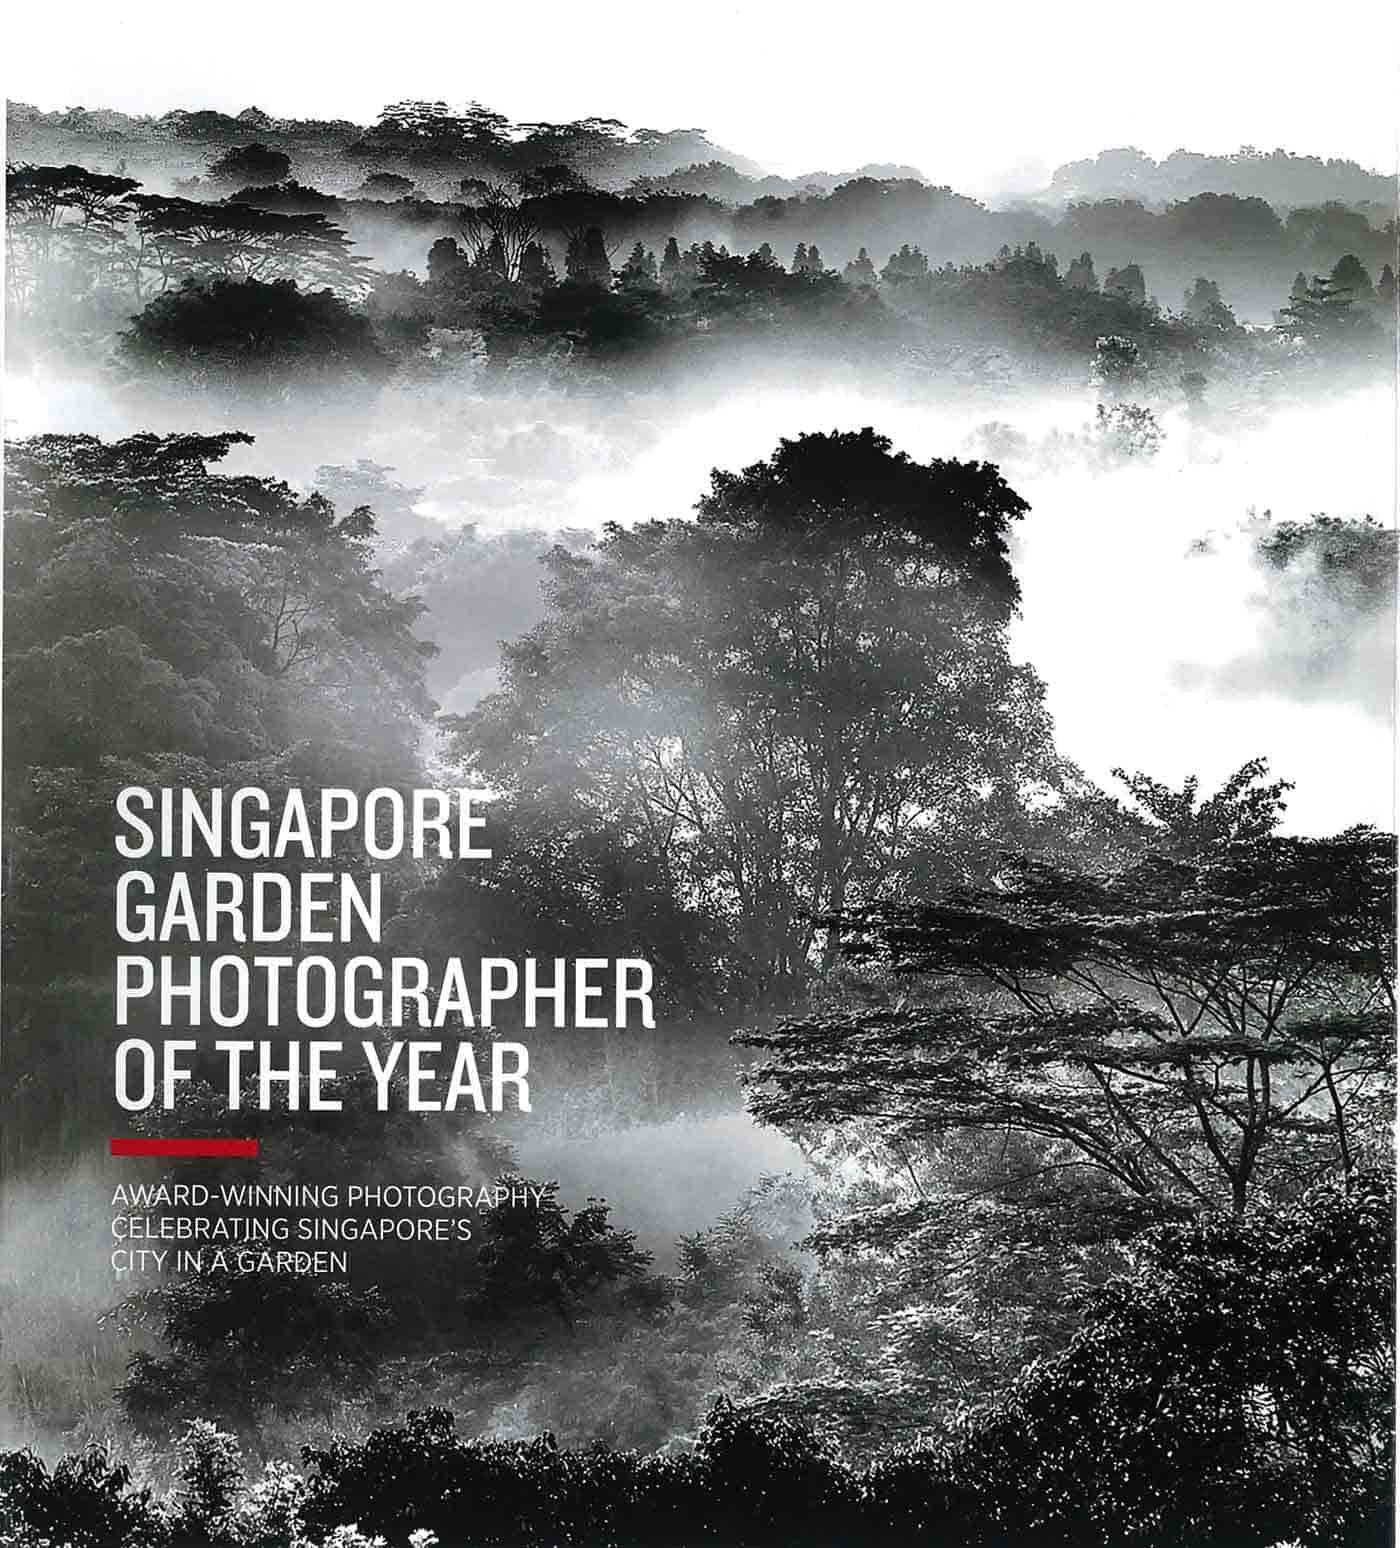 Singapore Garden Photographer of the Year